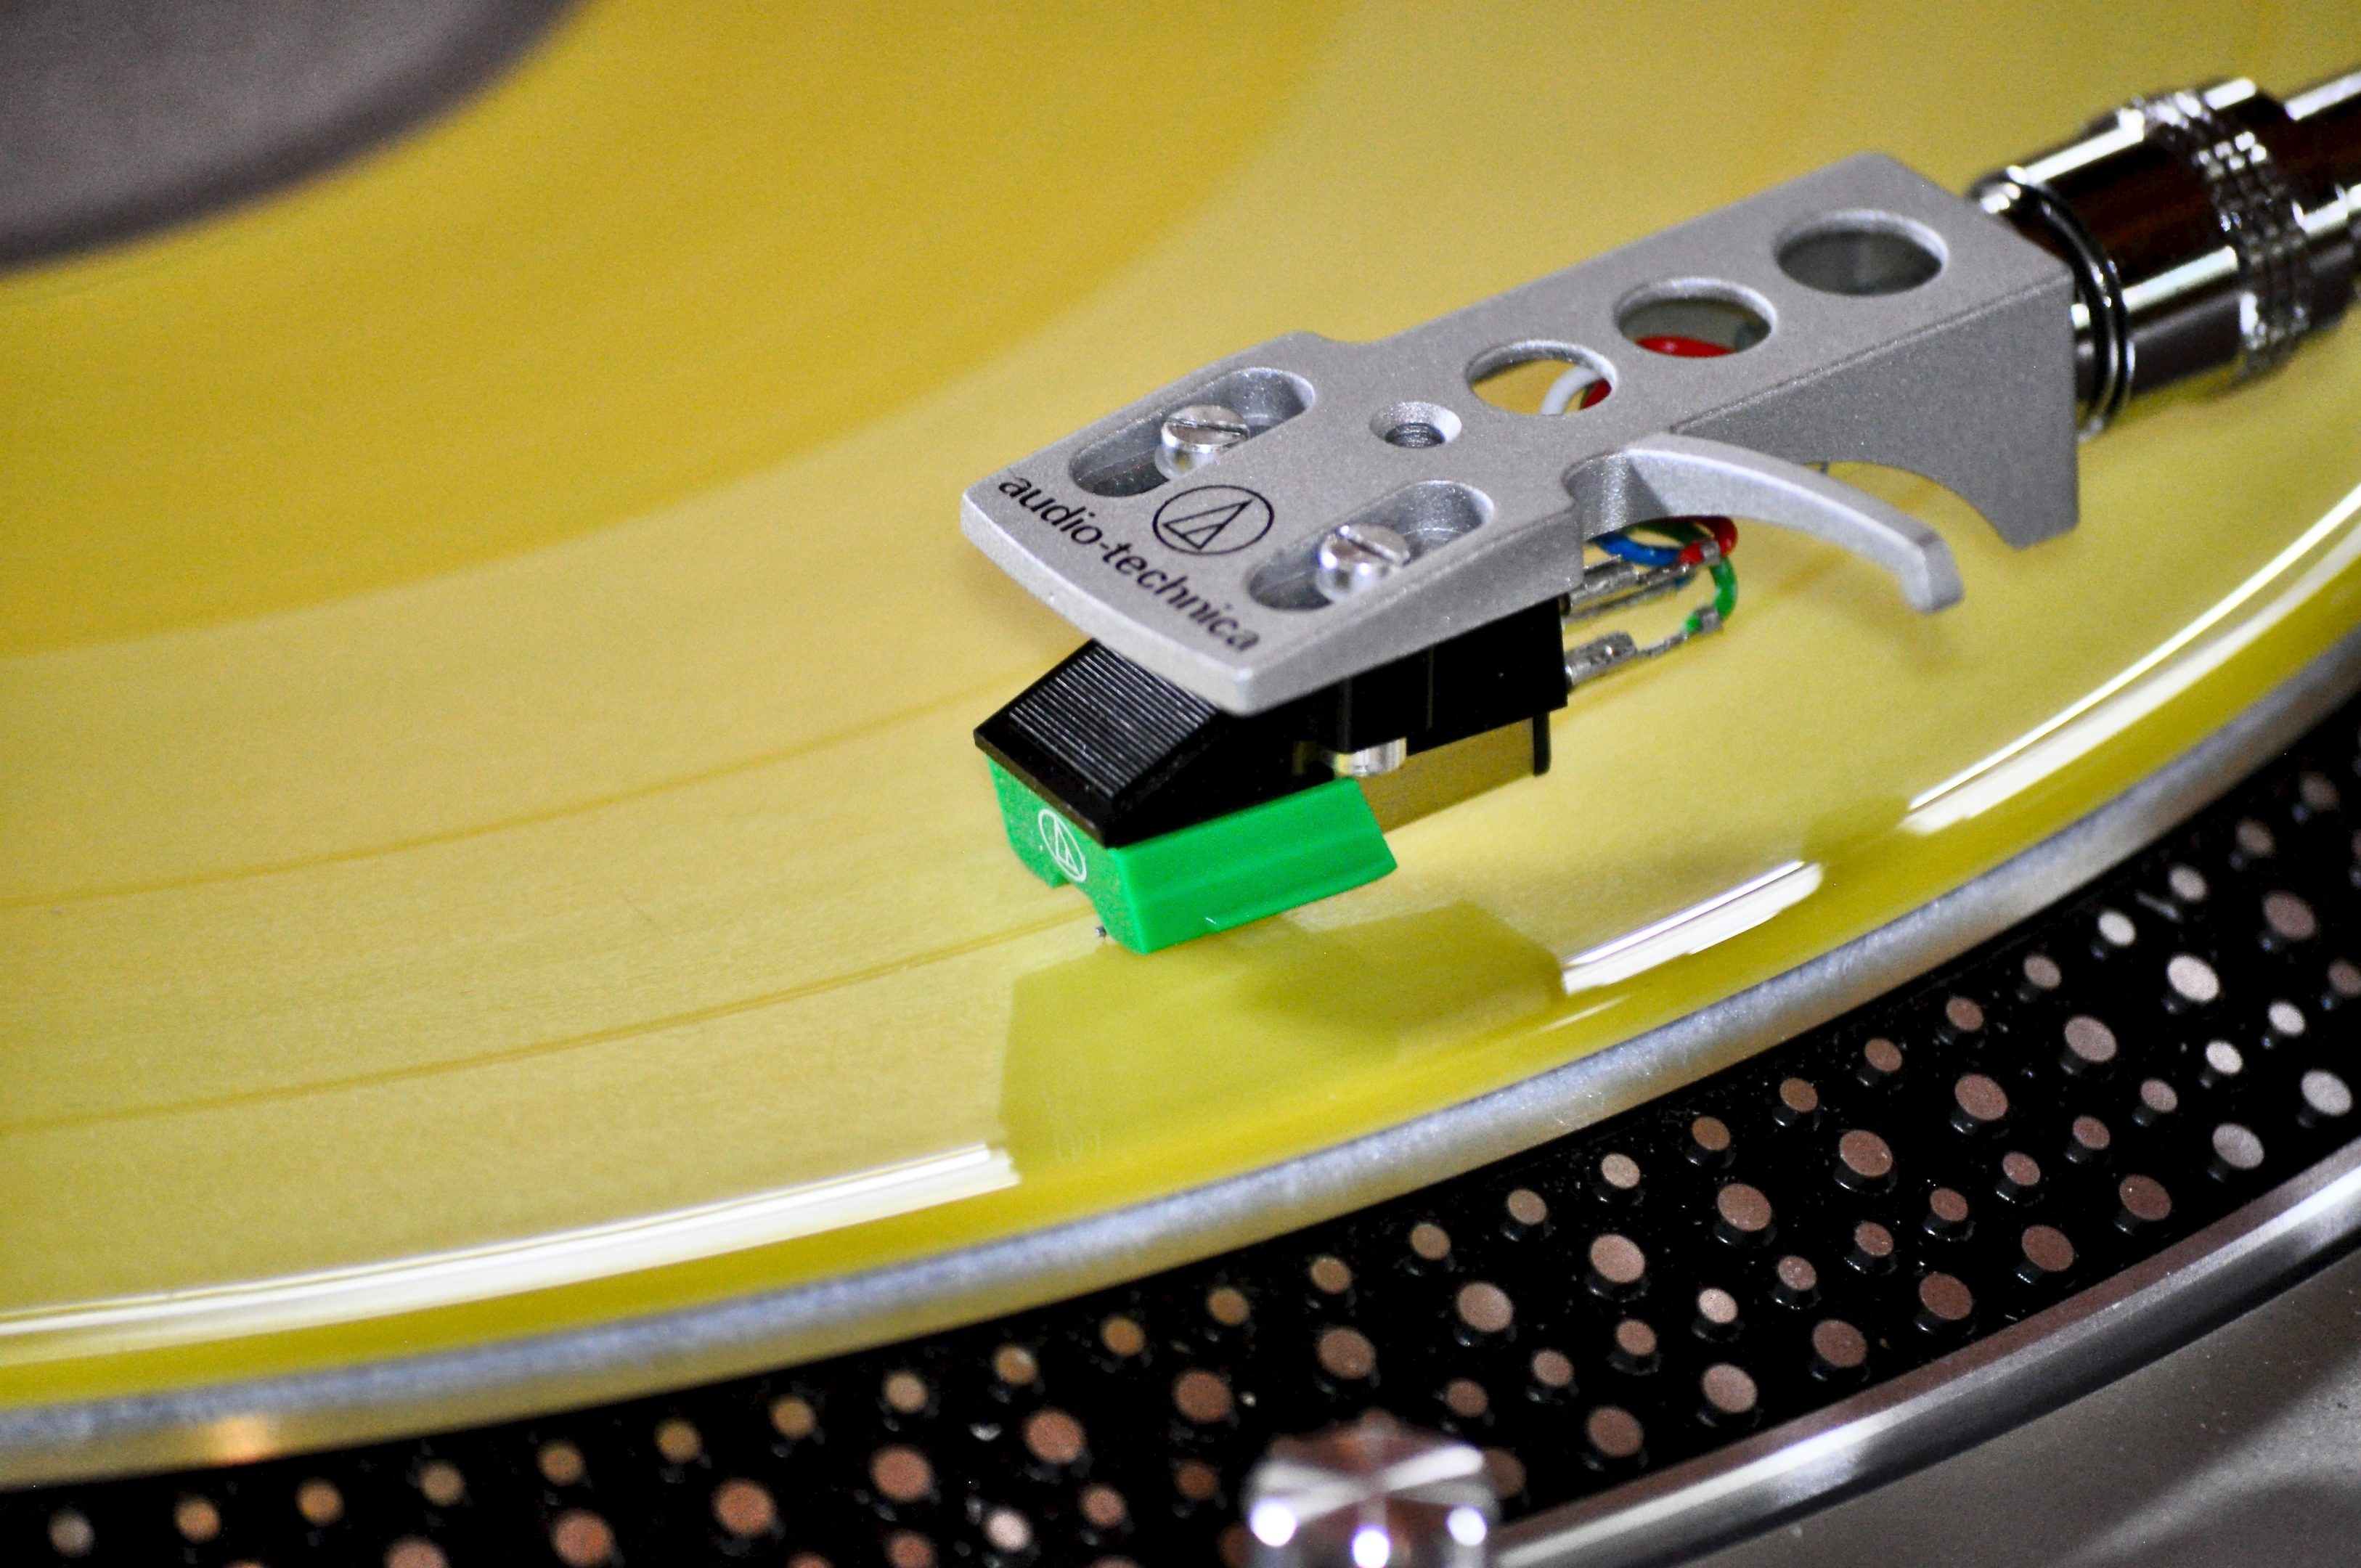 audio technica, direct drive record player, record player